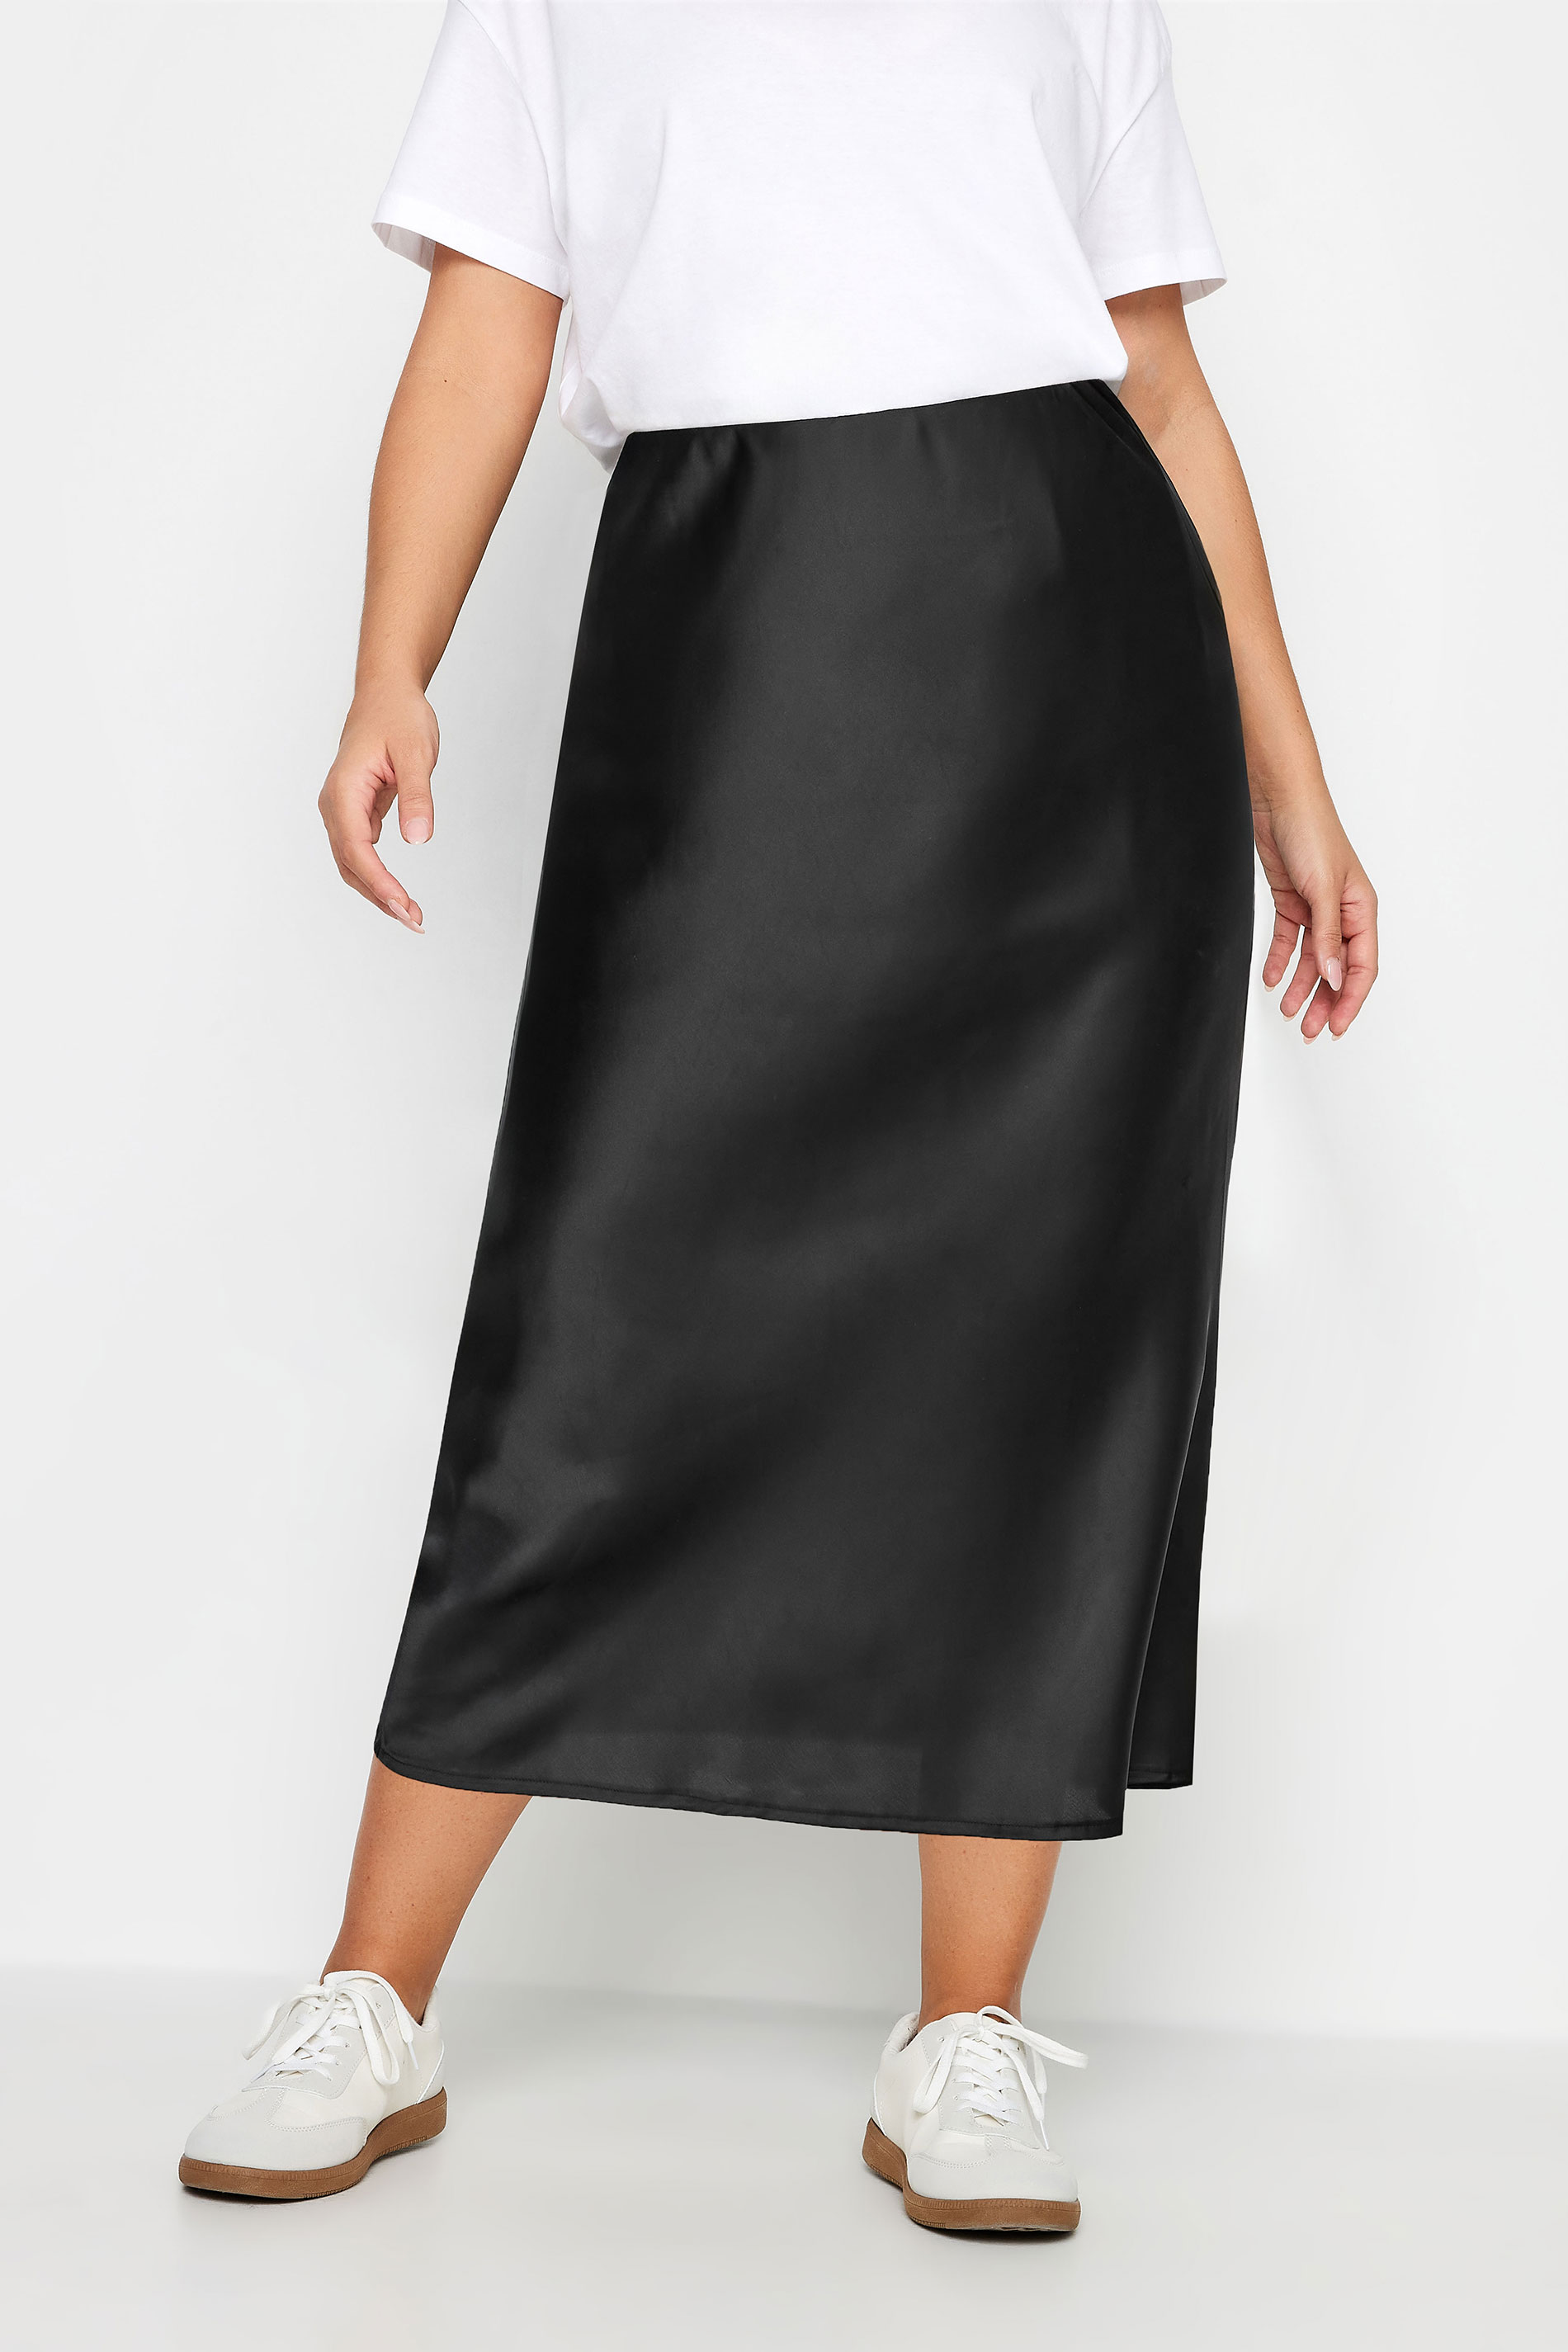 YOURS Plus Size Black Satin Midi Skirt | Yours Clothing 2